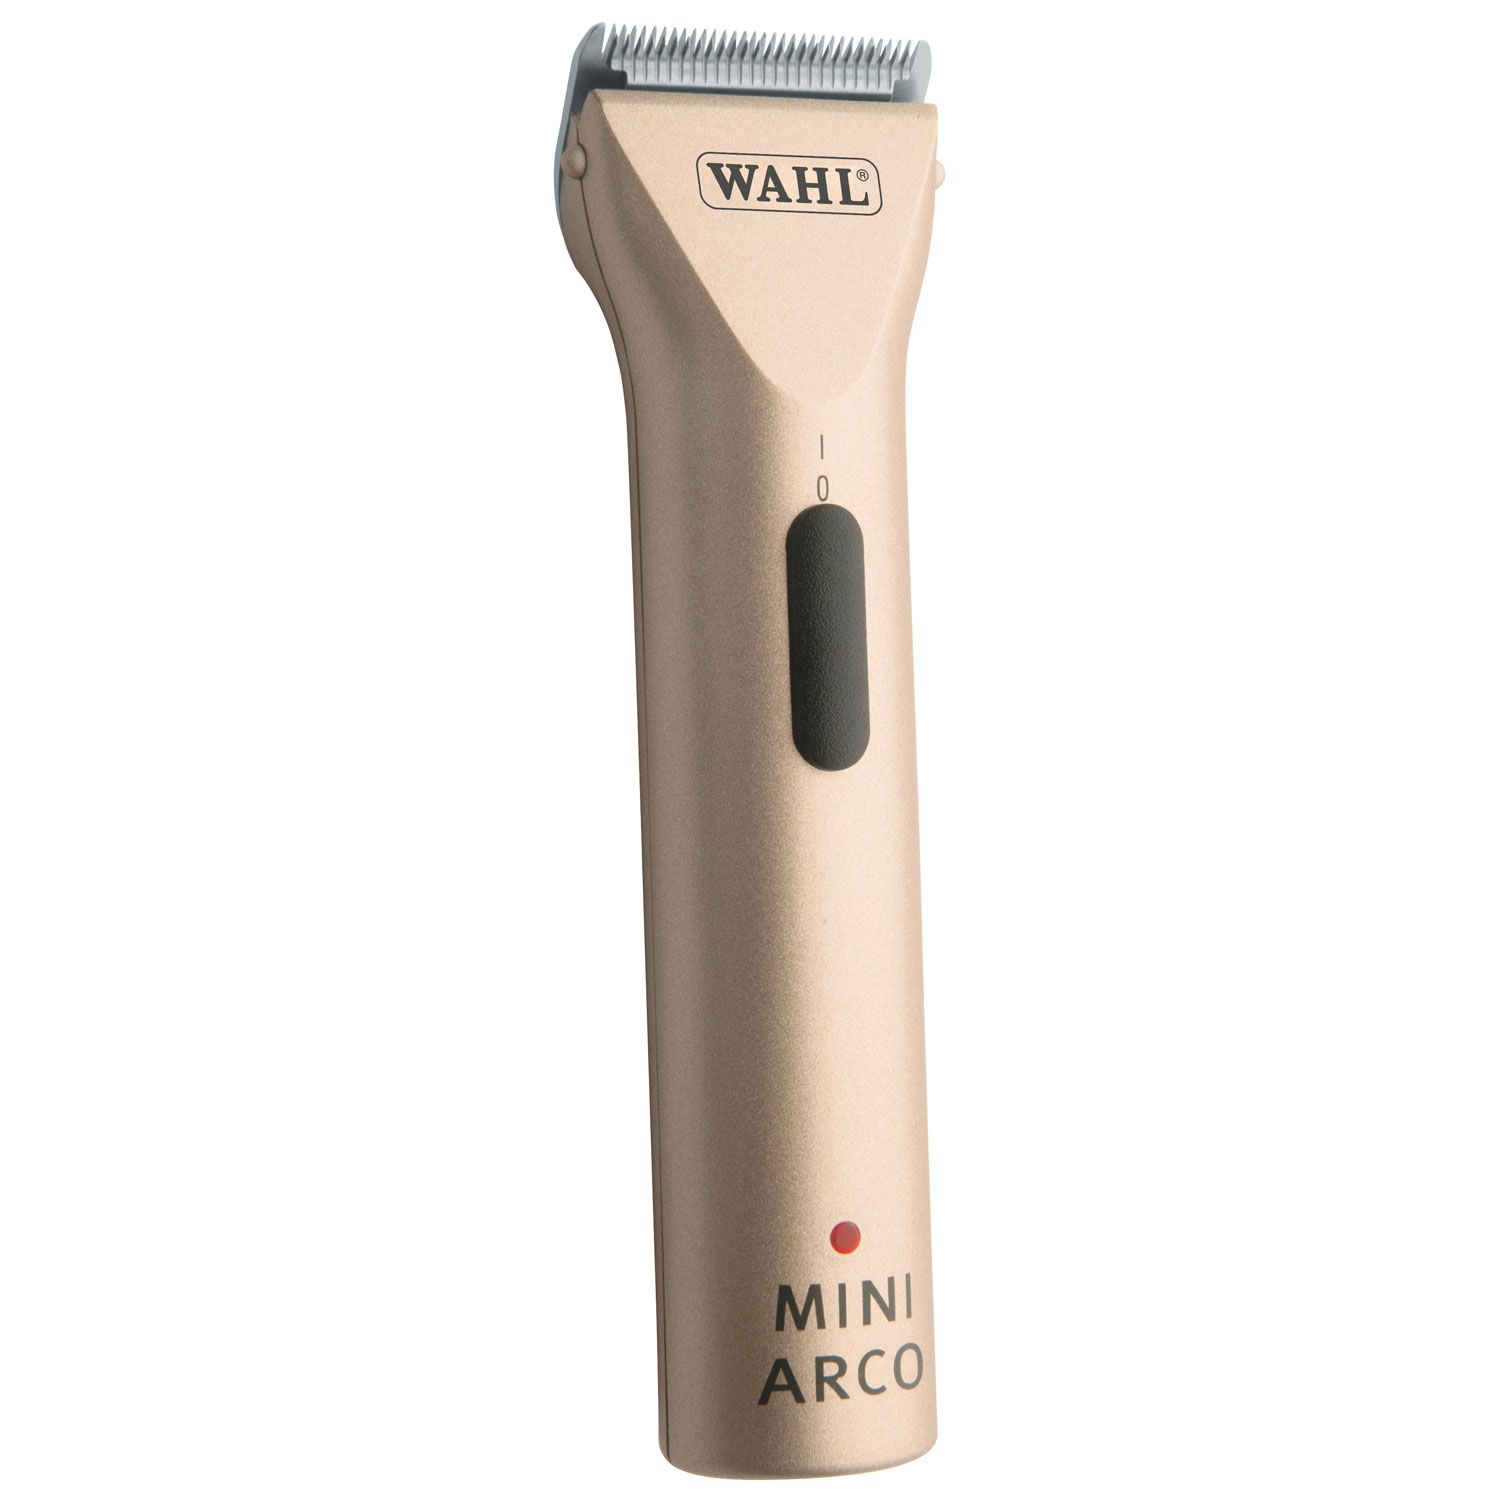 wahl mini pro cordless trimmer